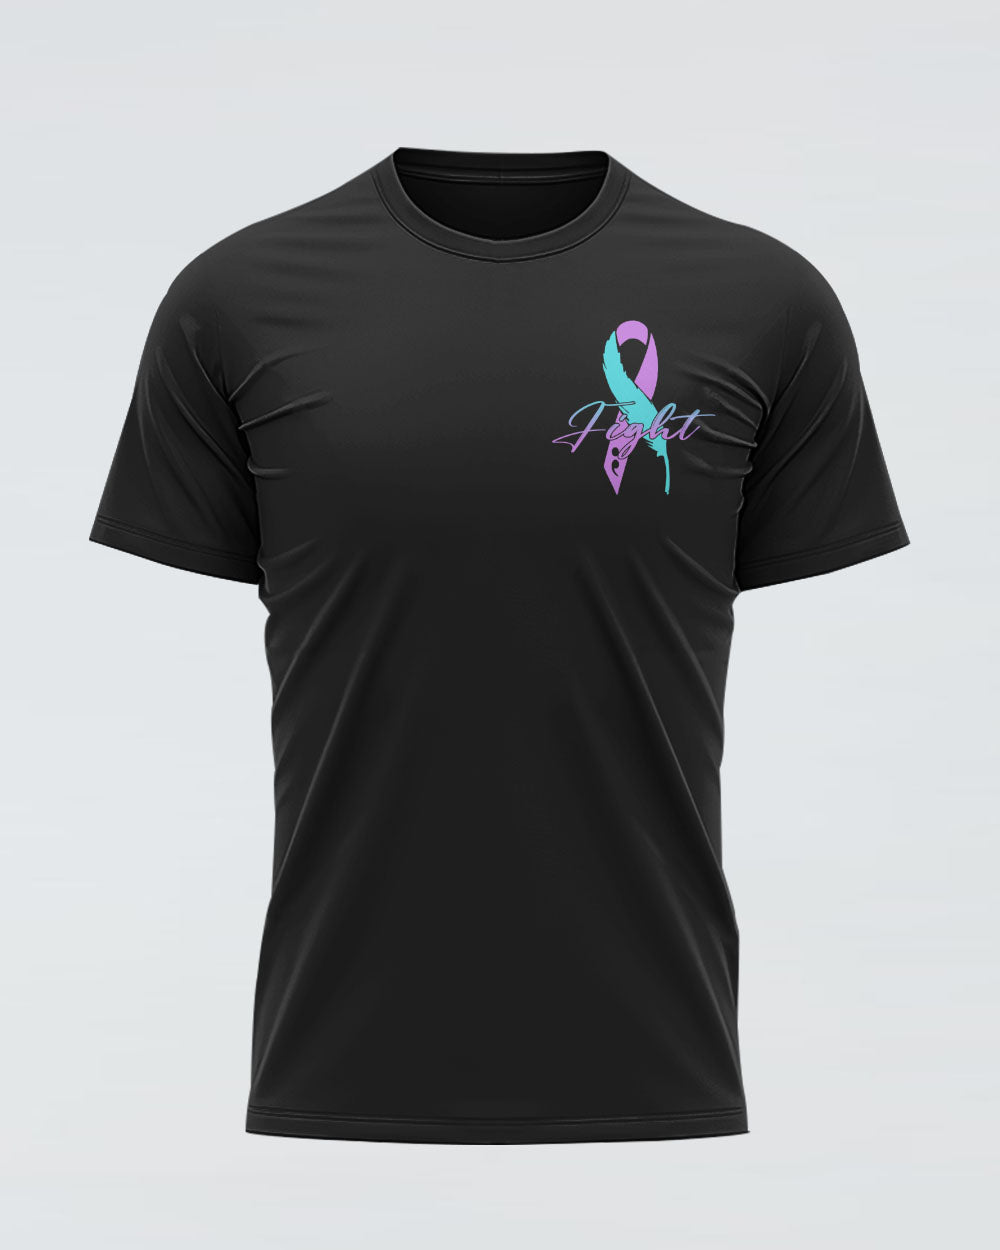 Colorful Ribbon Half Flower Smoke Women's Suicide Prevention Awareness Tshirt